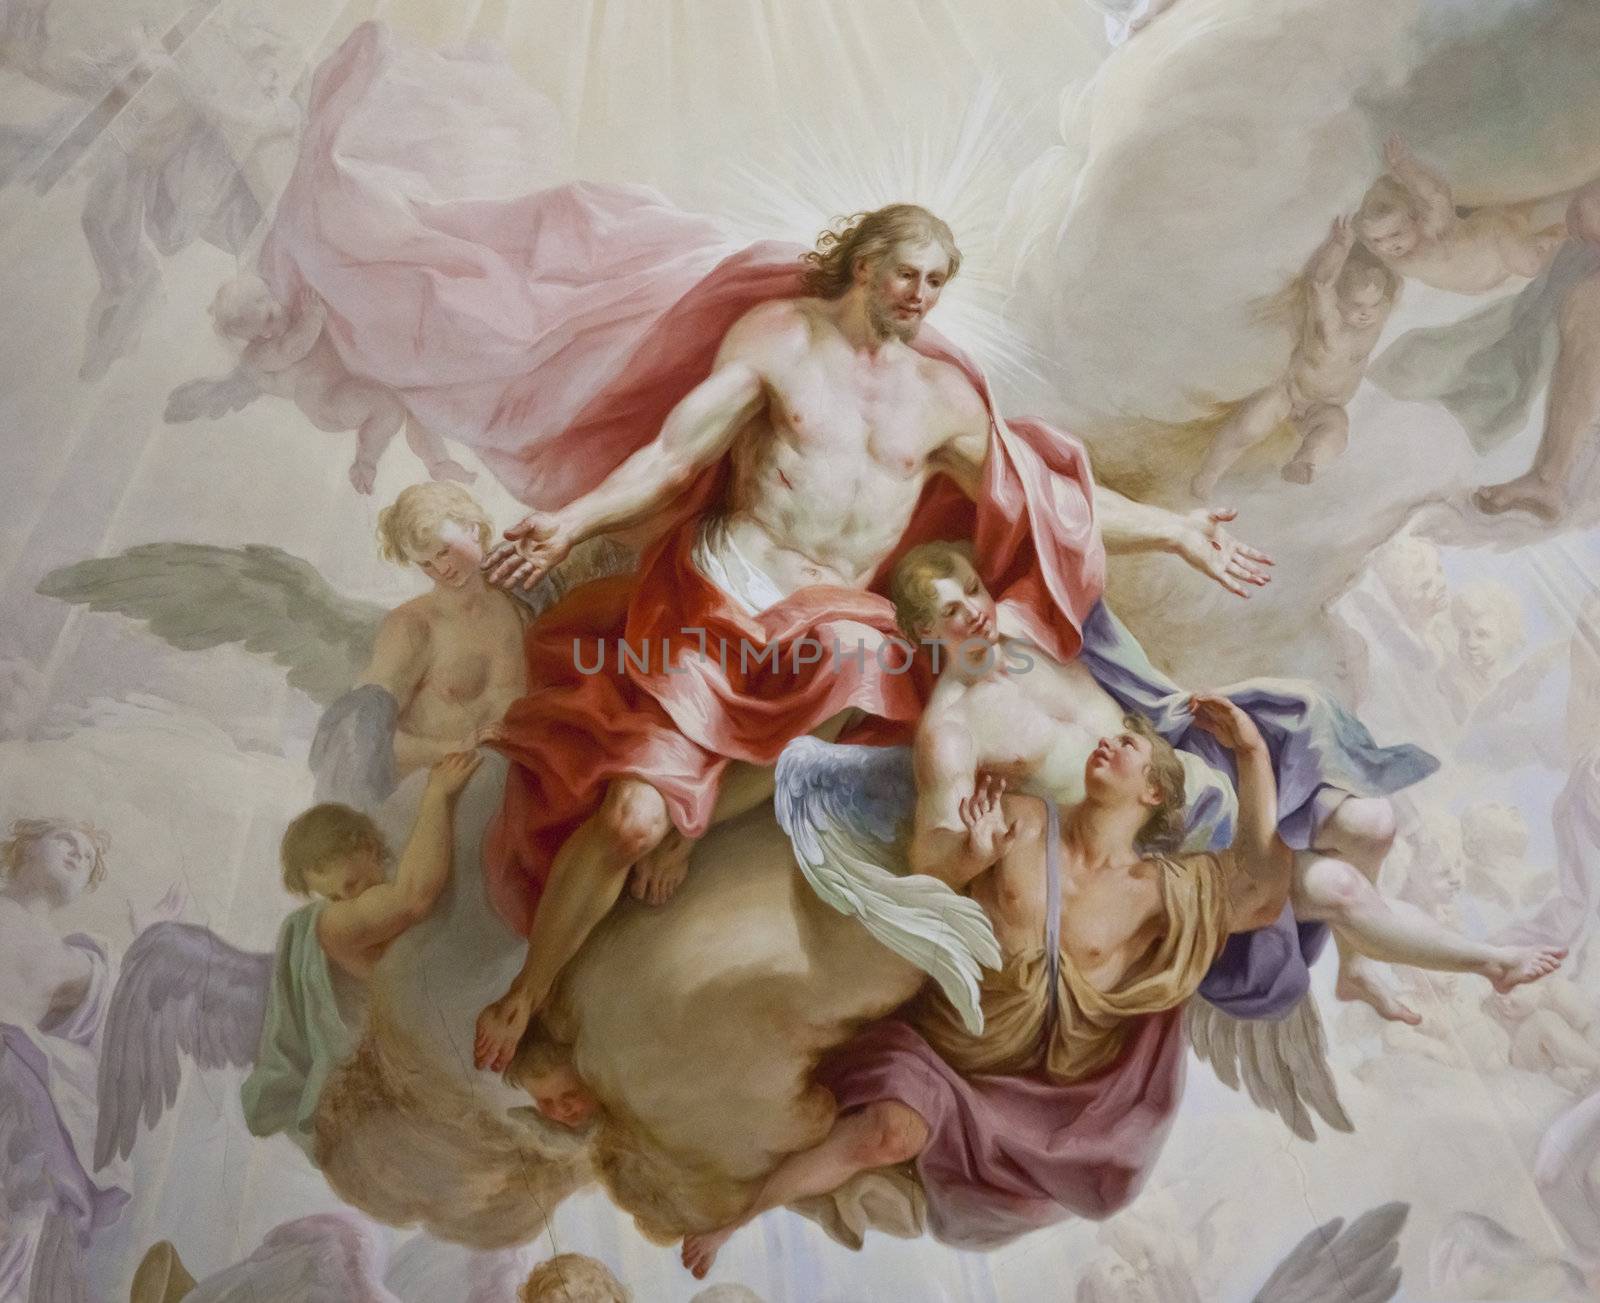 An image of a beautiful religious fresco